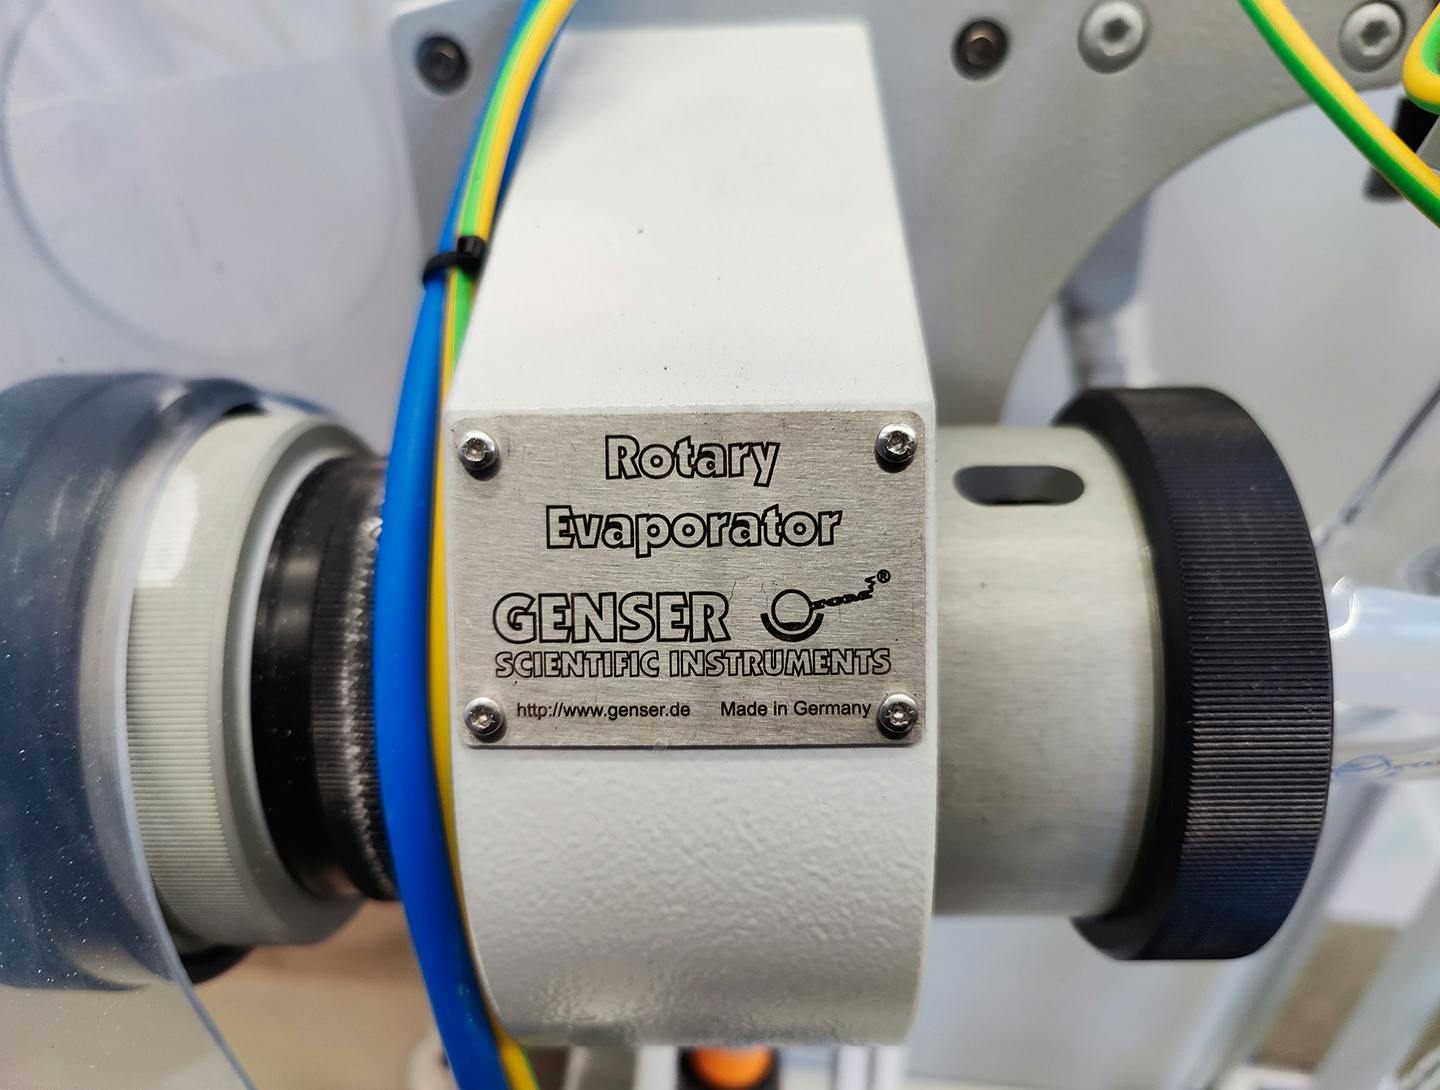 Genser Scientific Powervap 20 EX - Evaporador rotativo - image 12